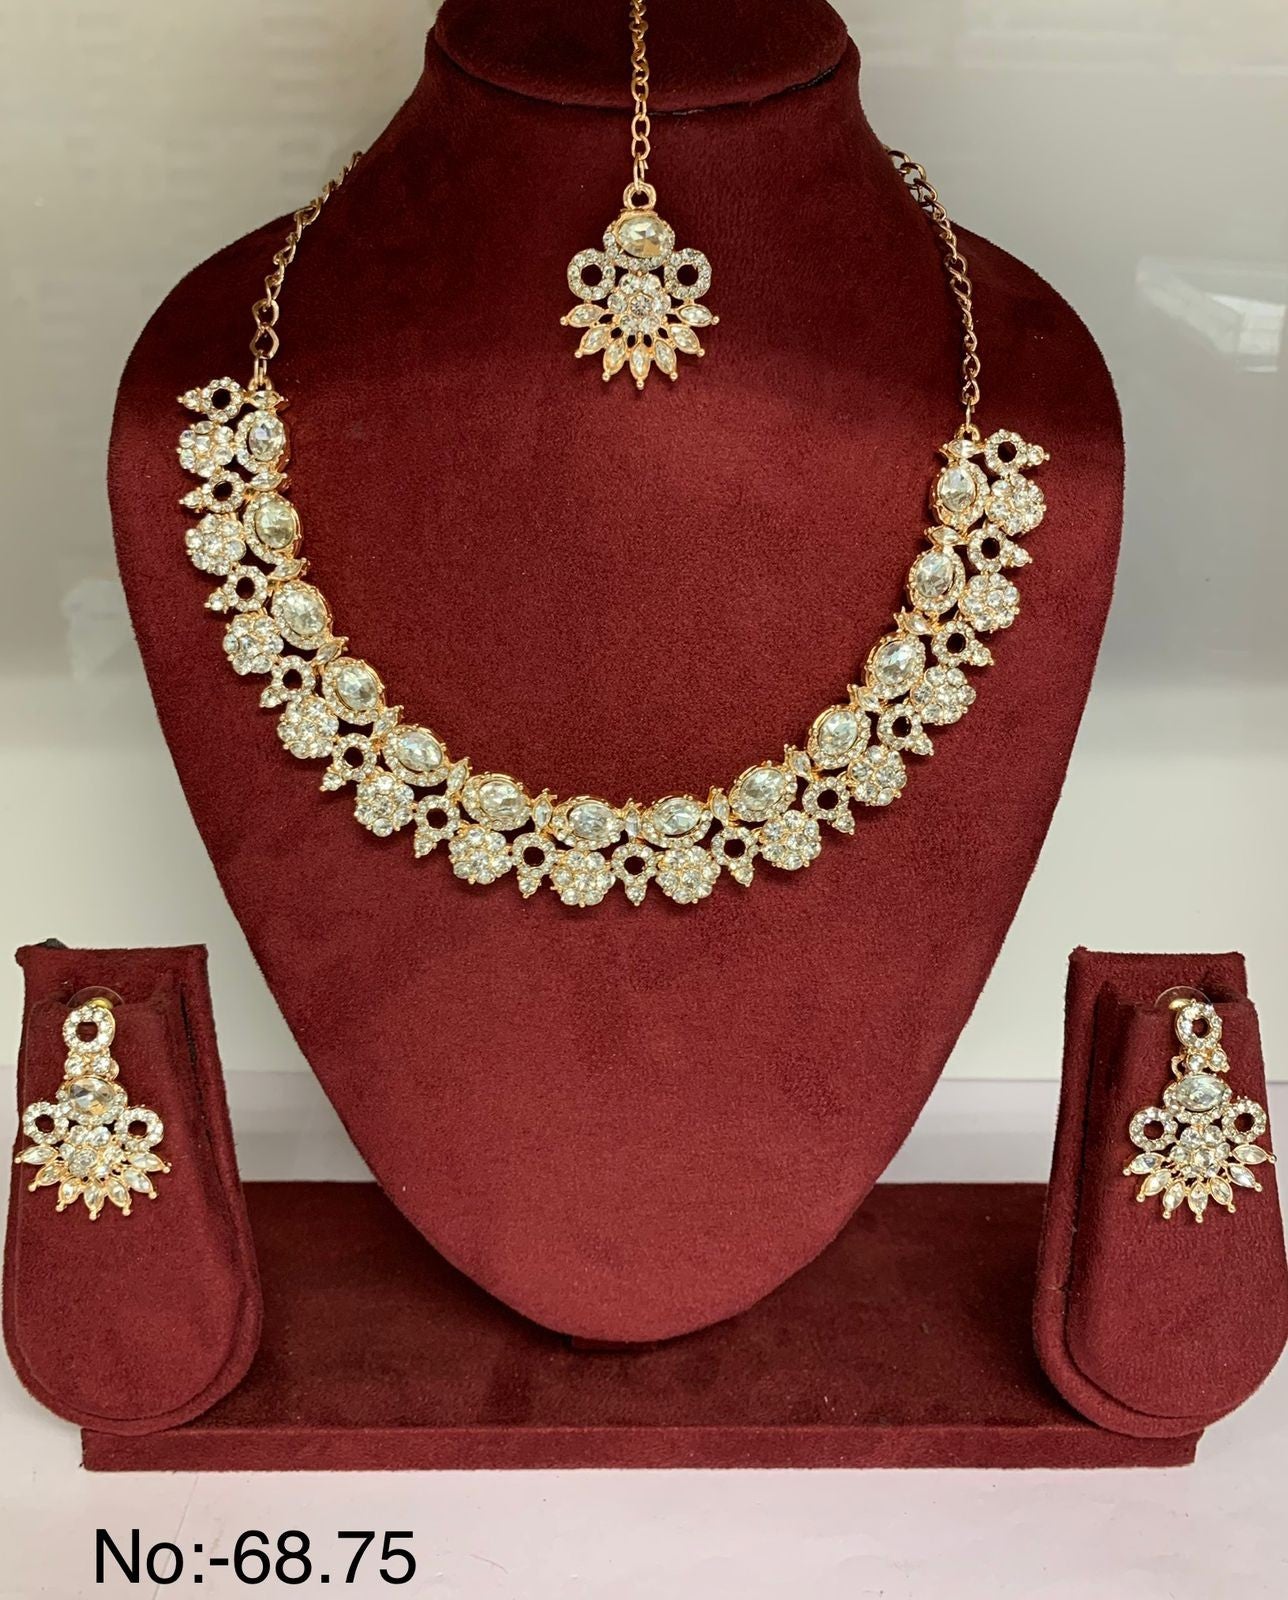 Beautiful Oval Shape Diamond Necklace